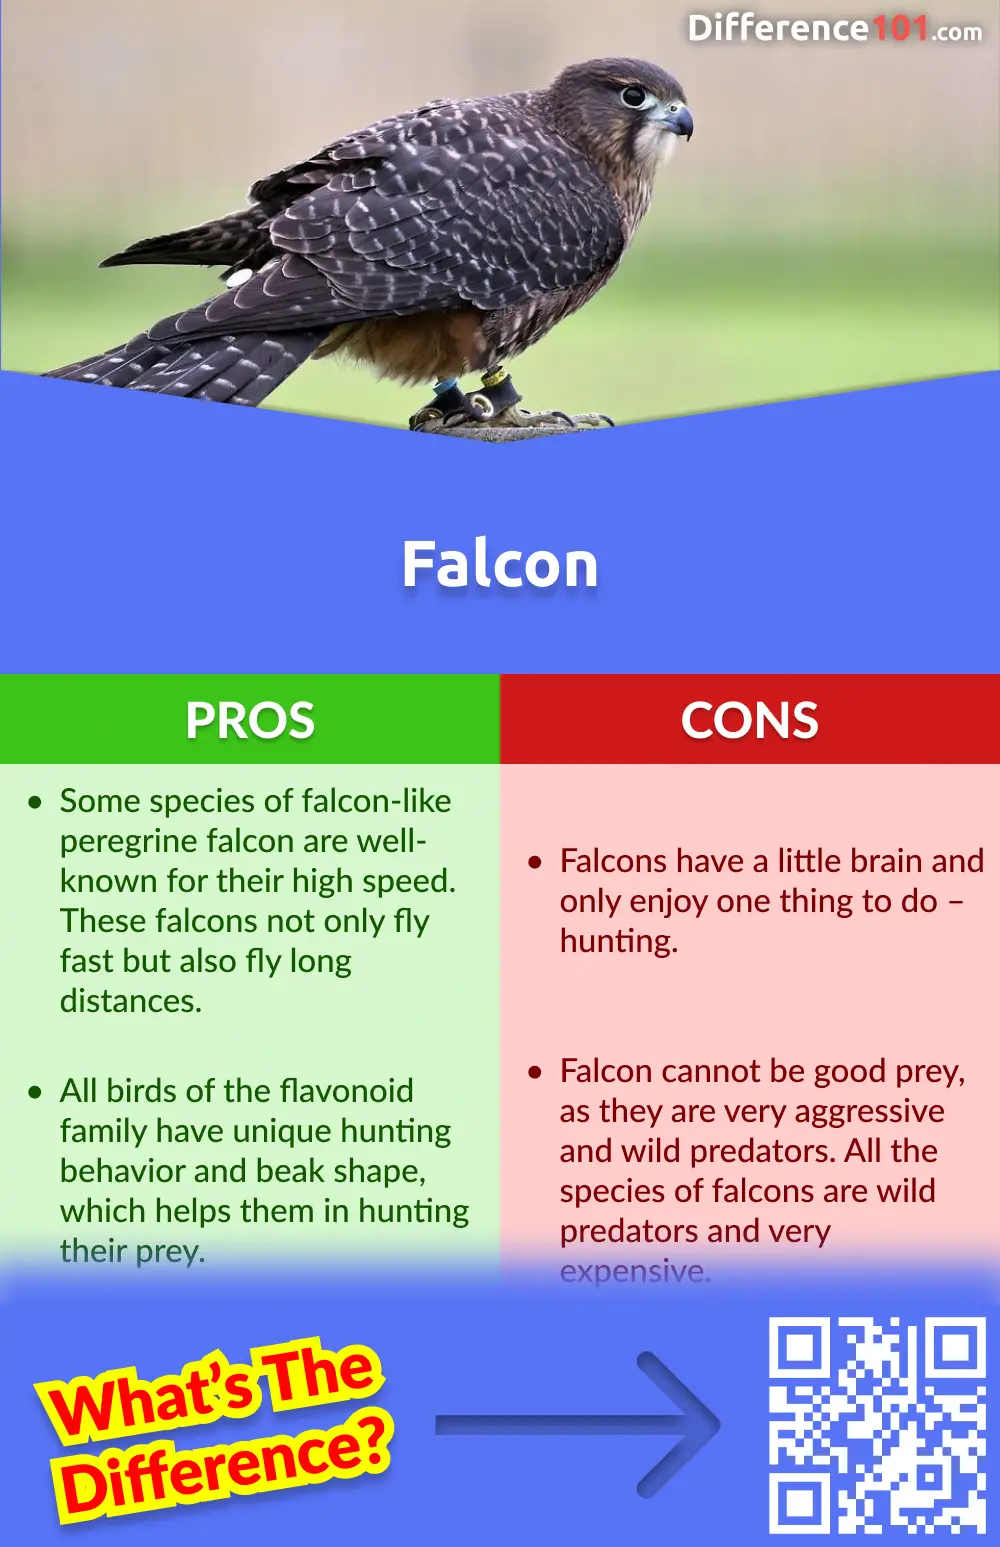 Falcon Pros and Cons